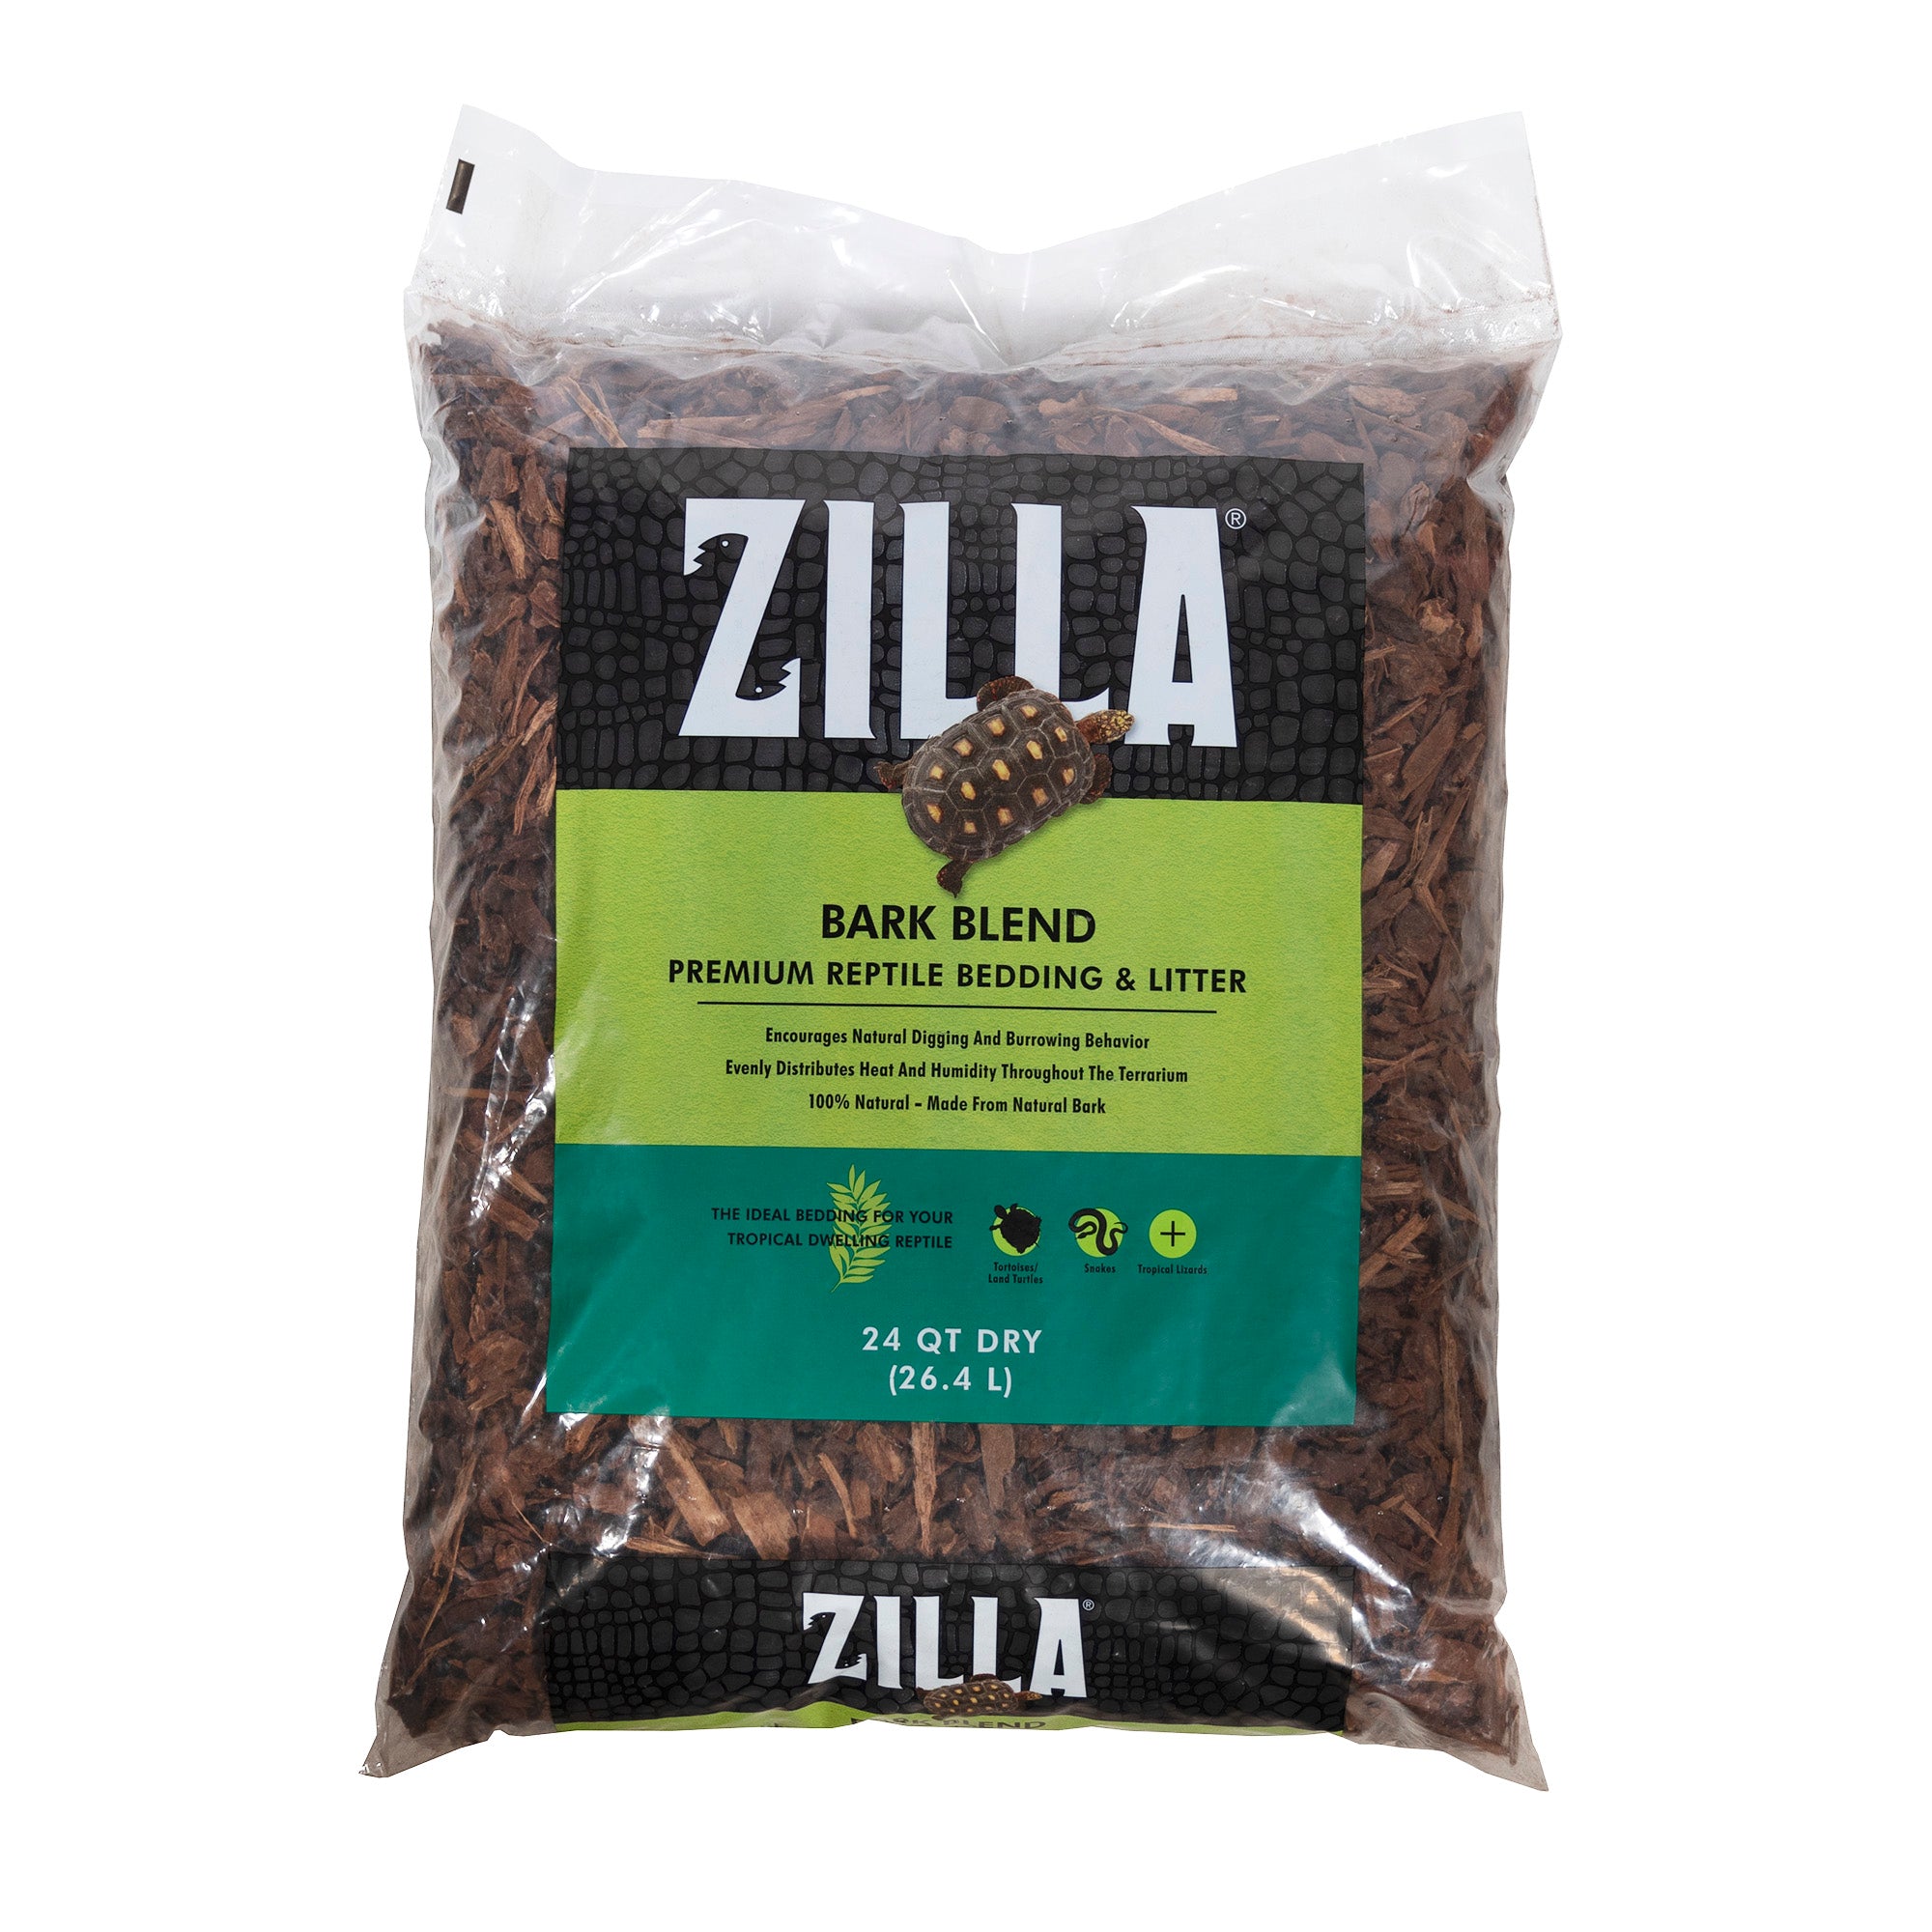 Zilla Bark Blend Primium Oven-Dried Reptile Bedding and Litter, 24 QT